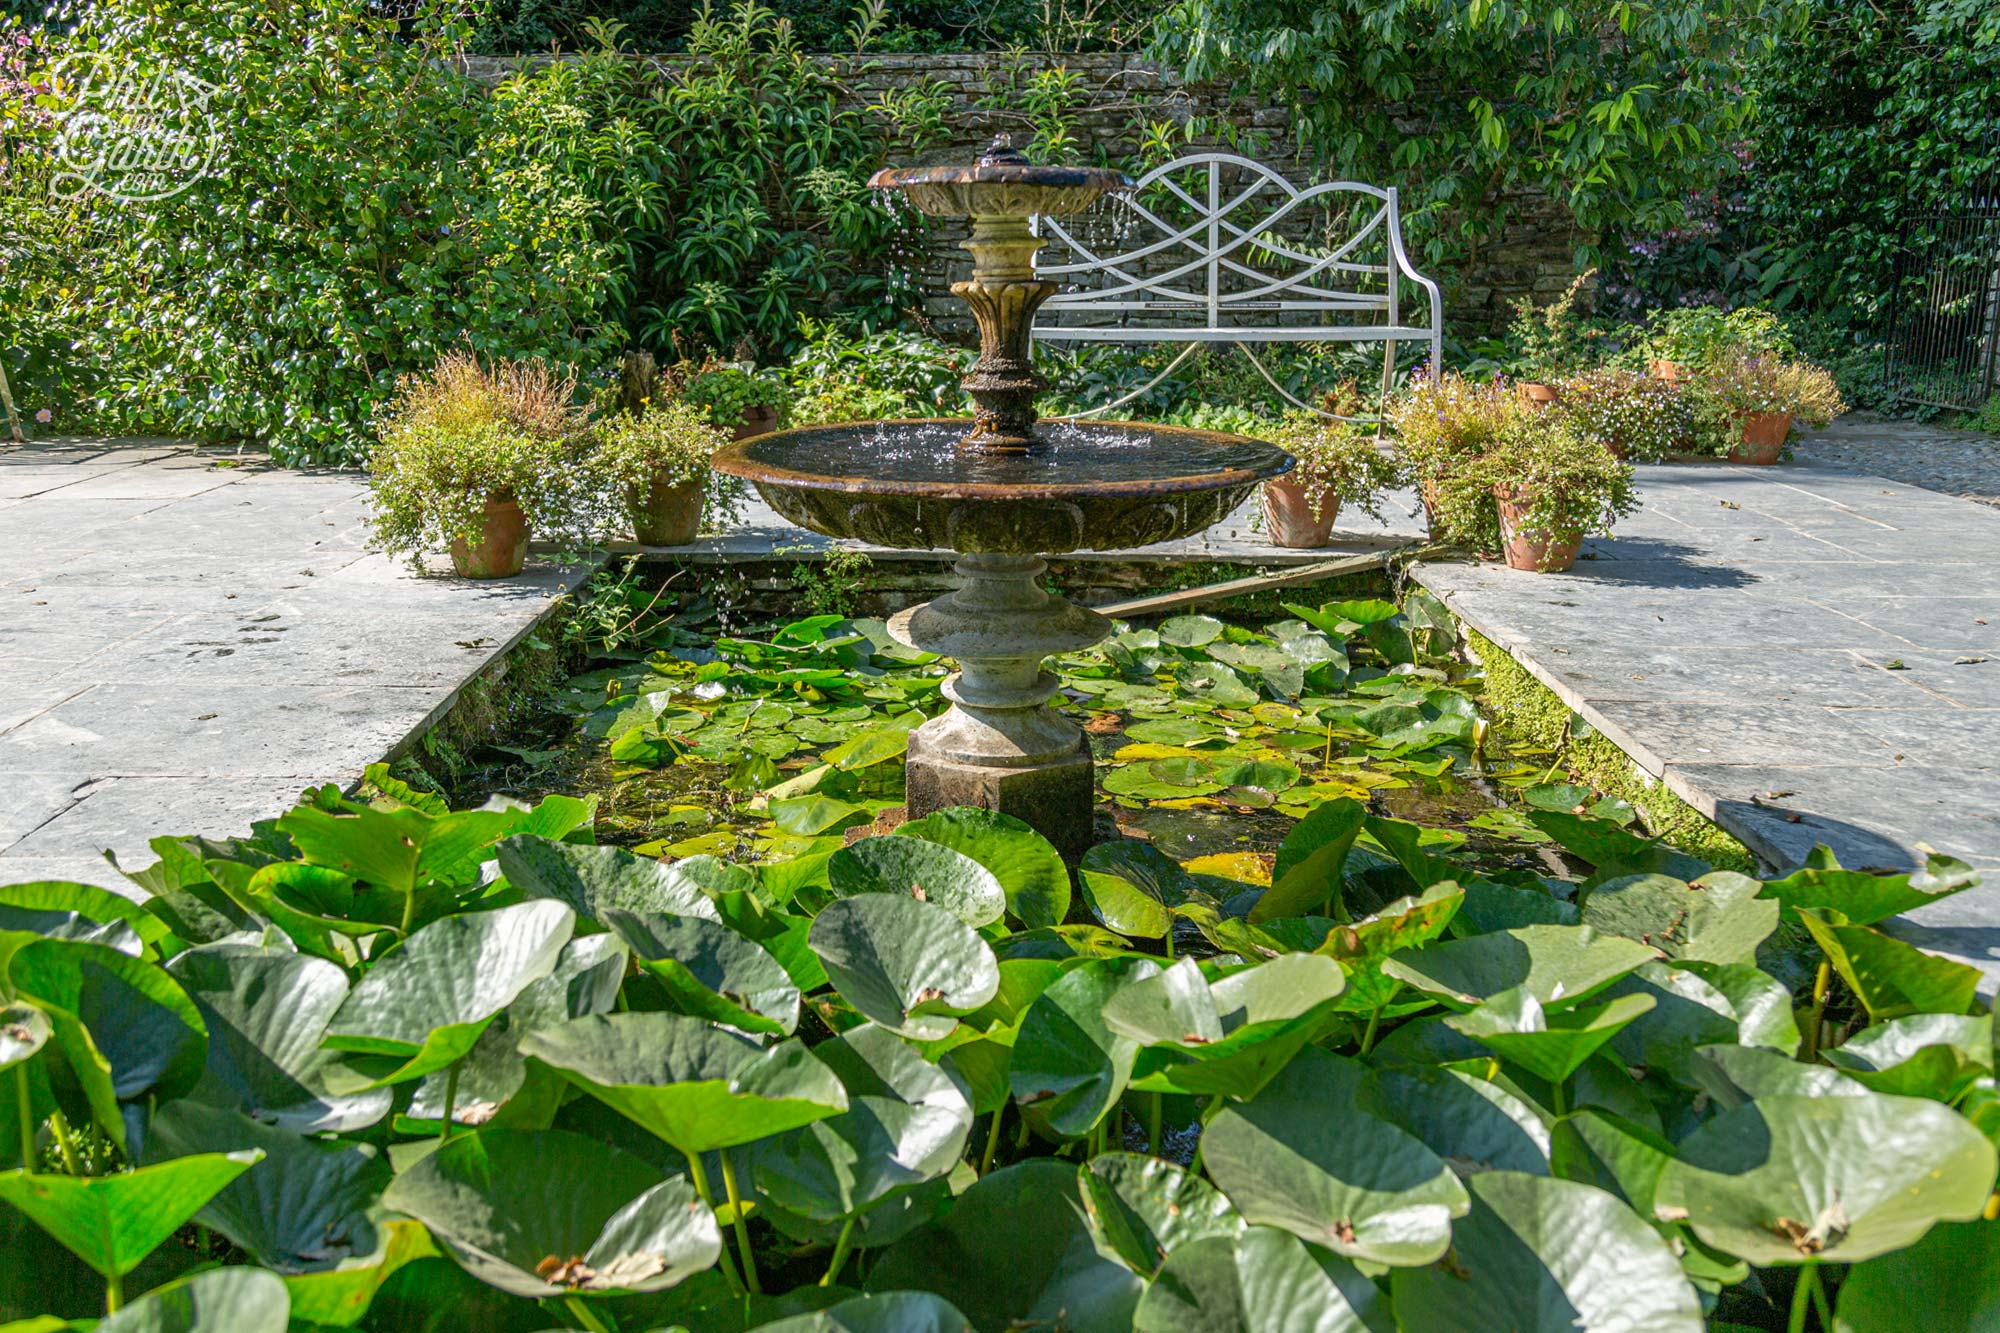 An ornamental pond at the Northern Summerhouse garden